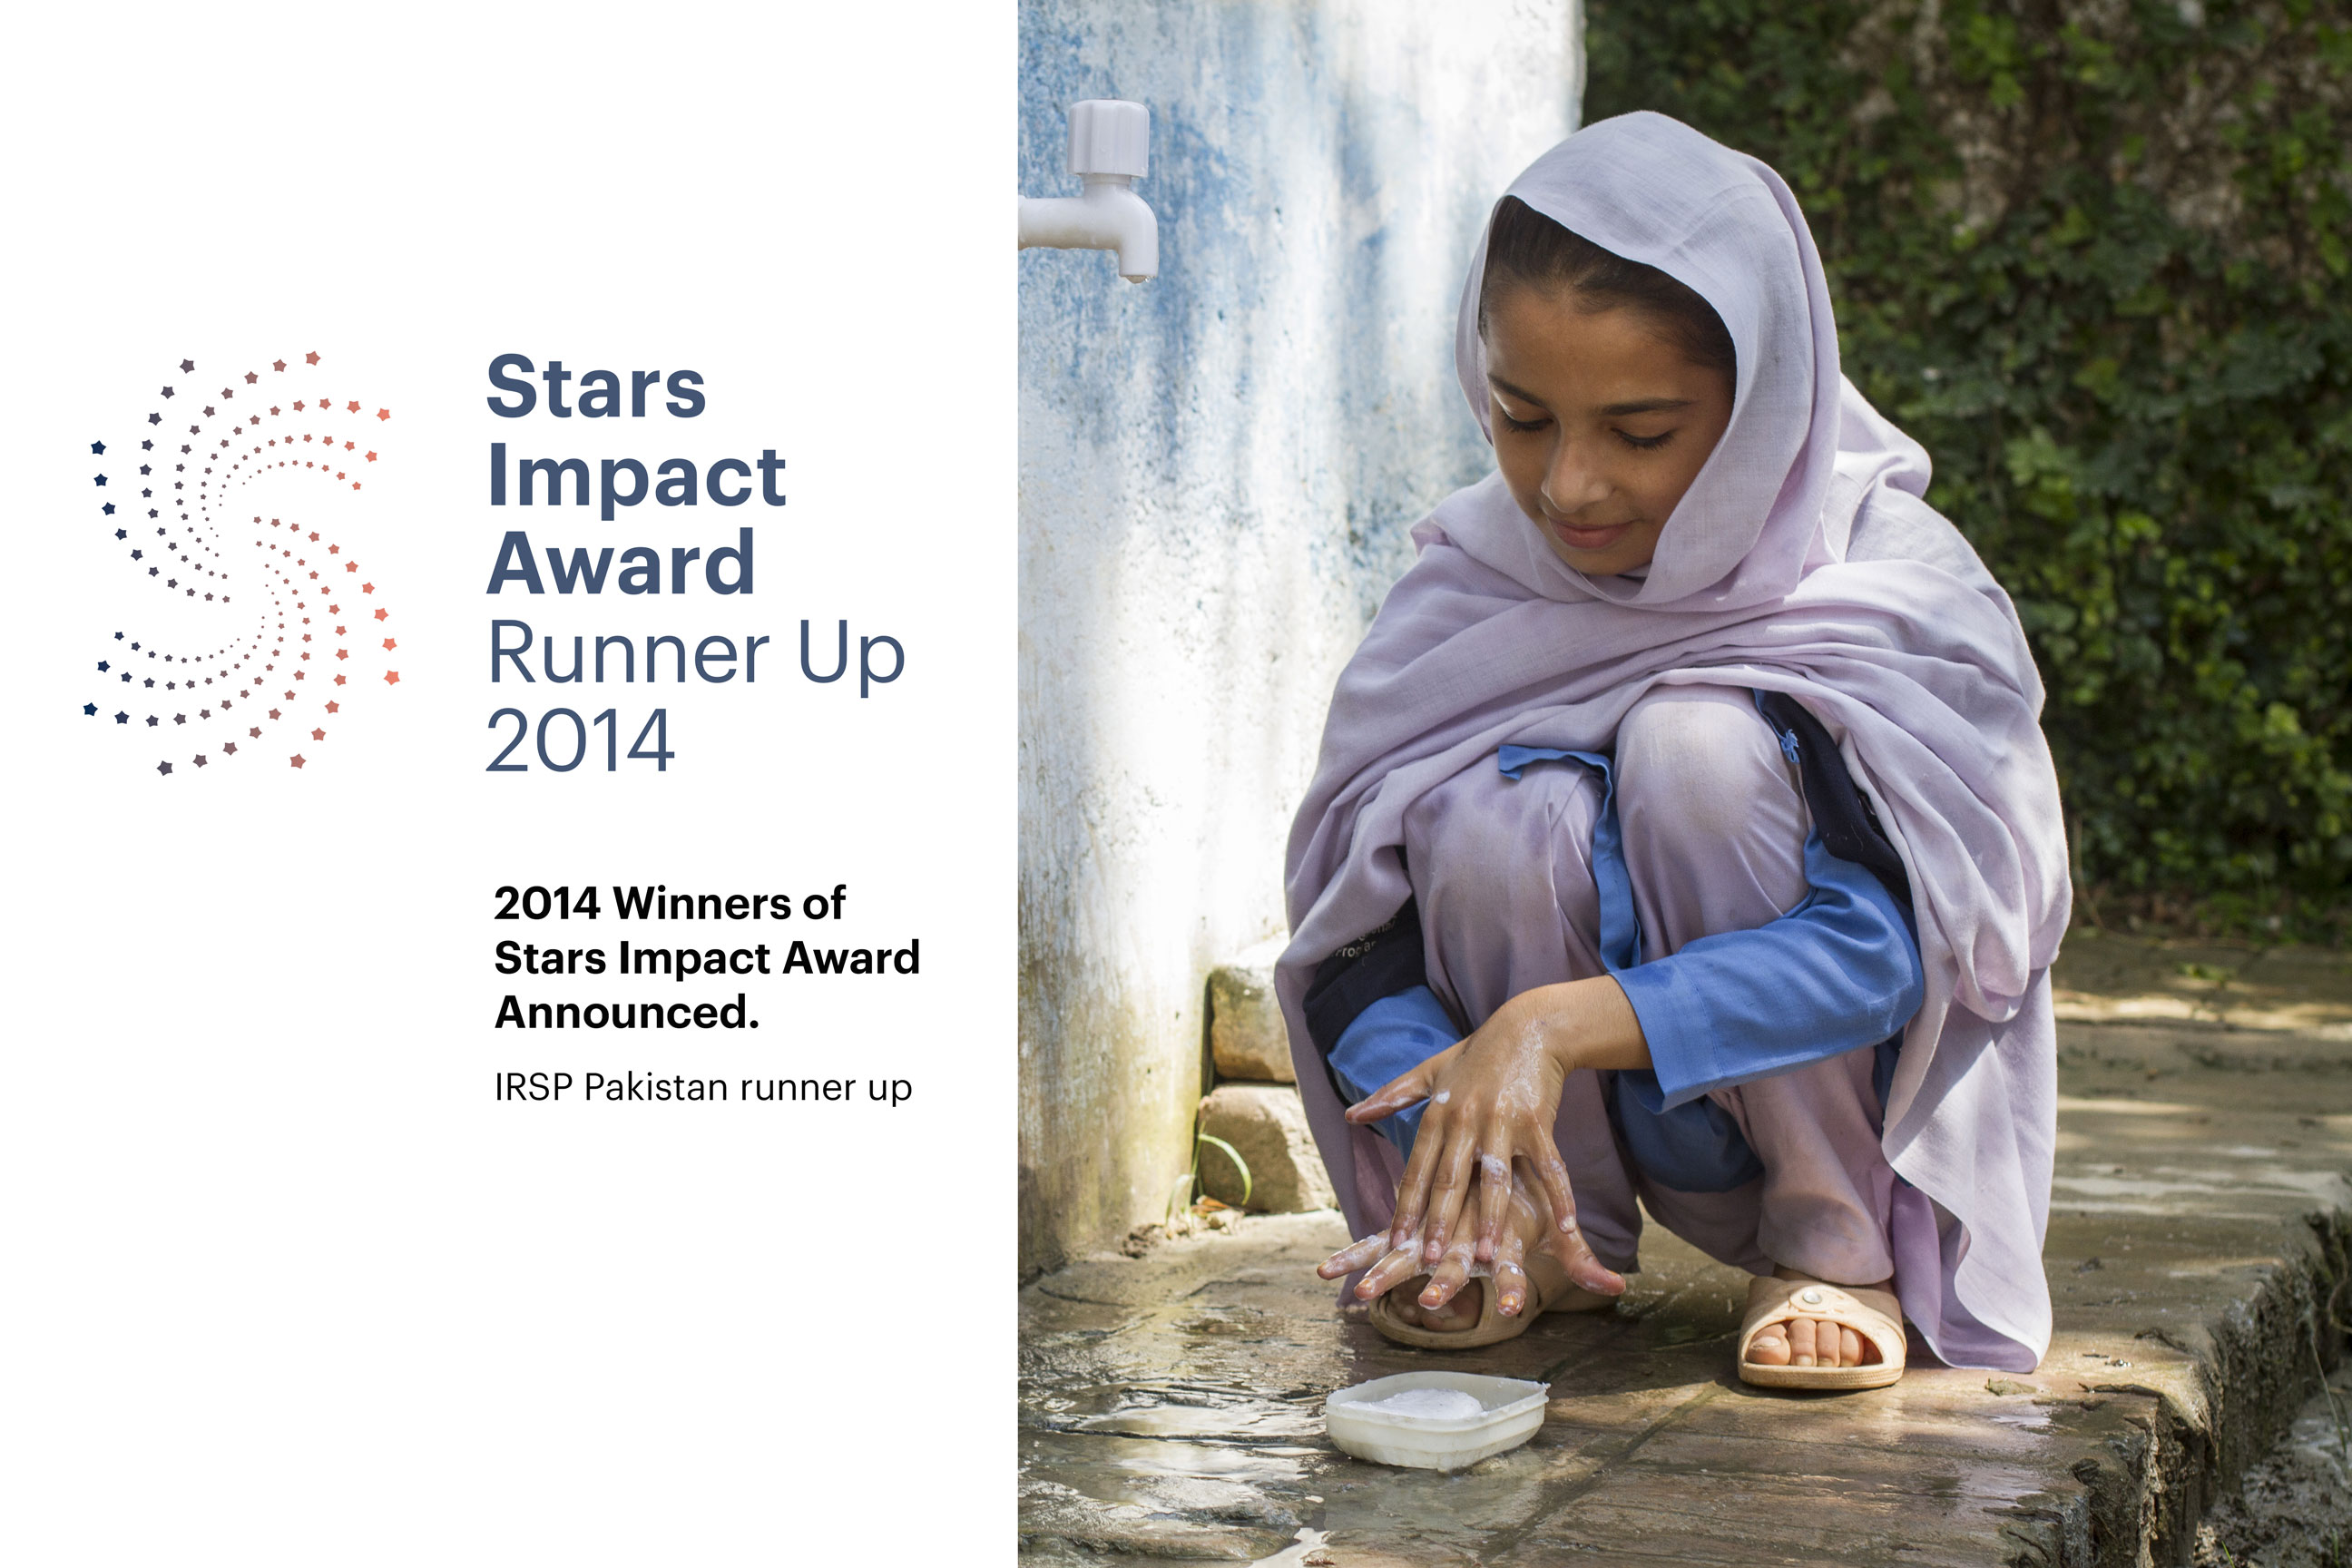 PRESS RELEASE: Pakistani charity wins international award for outstanding work